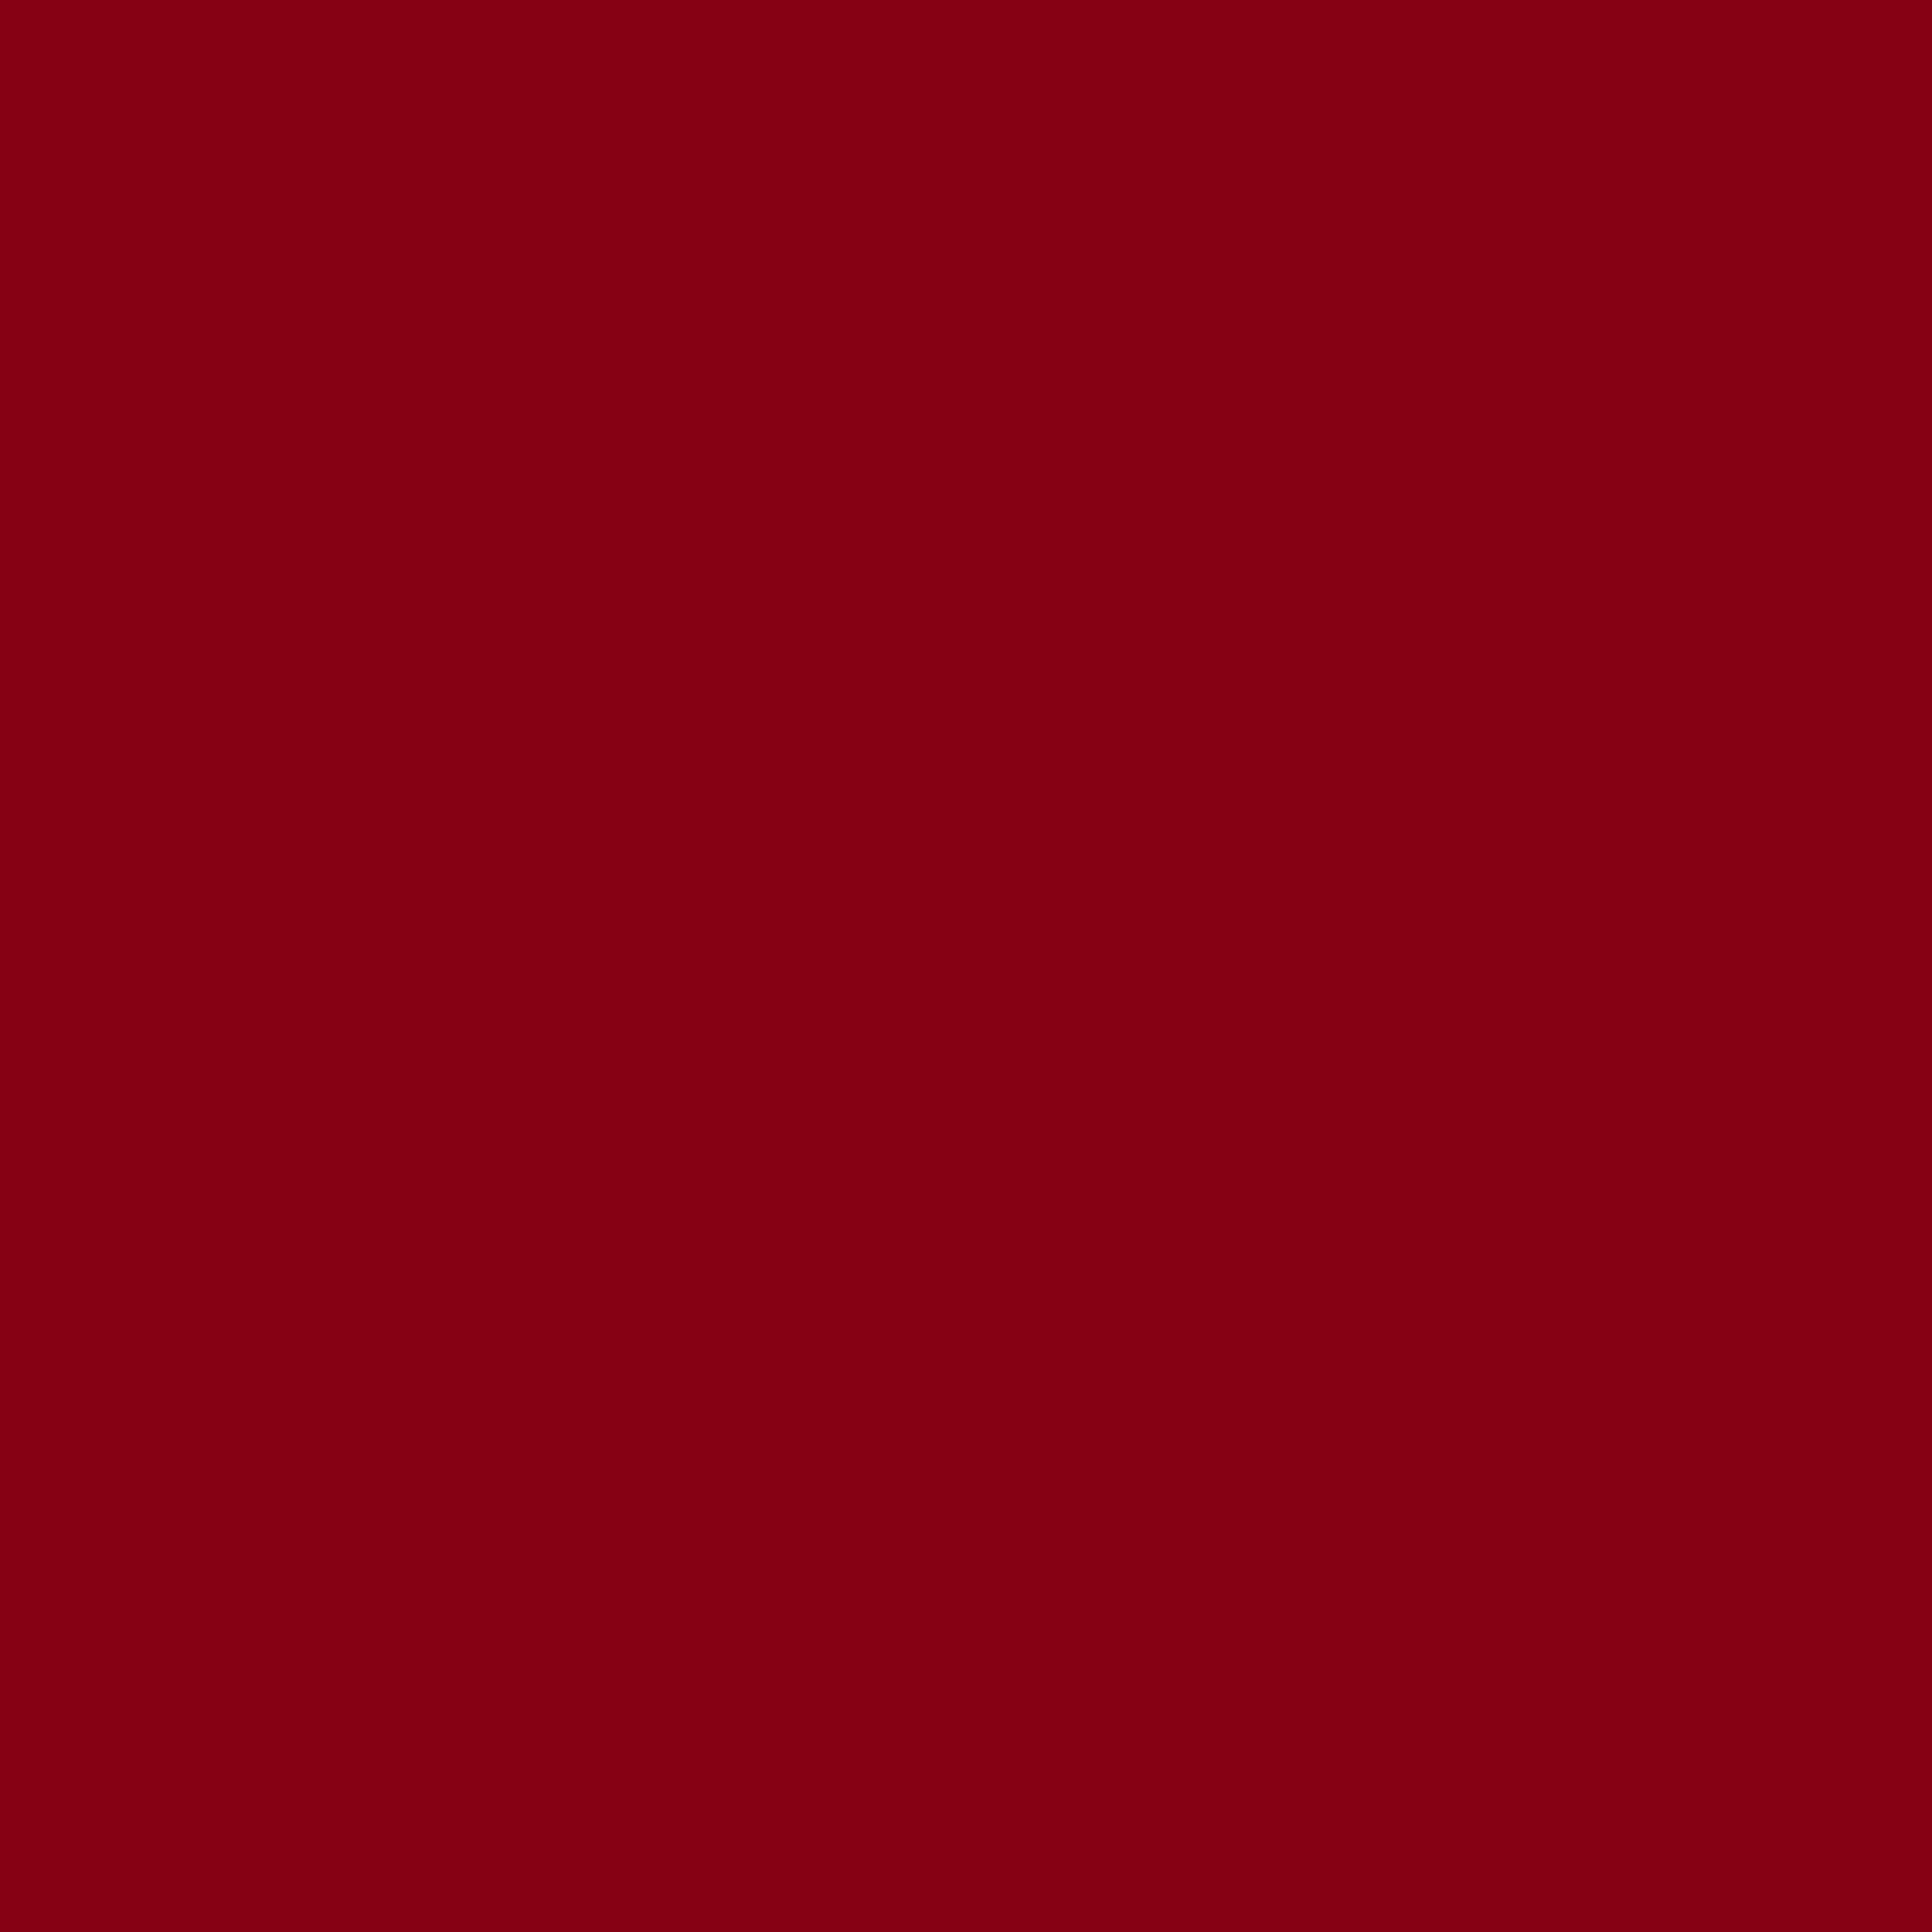 2732x2732 Red Devil Solid Color Background